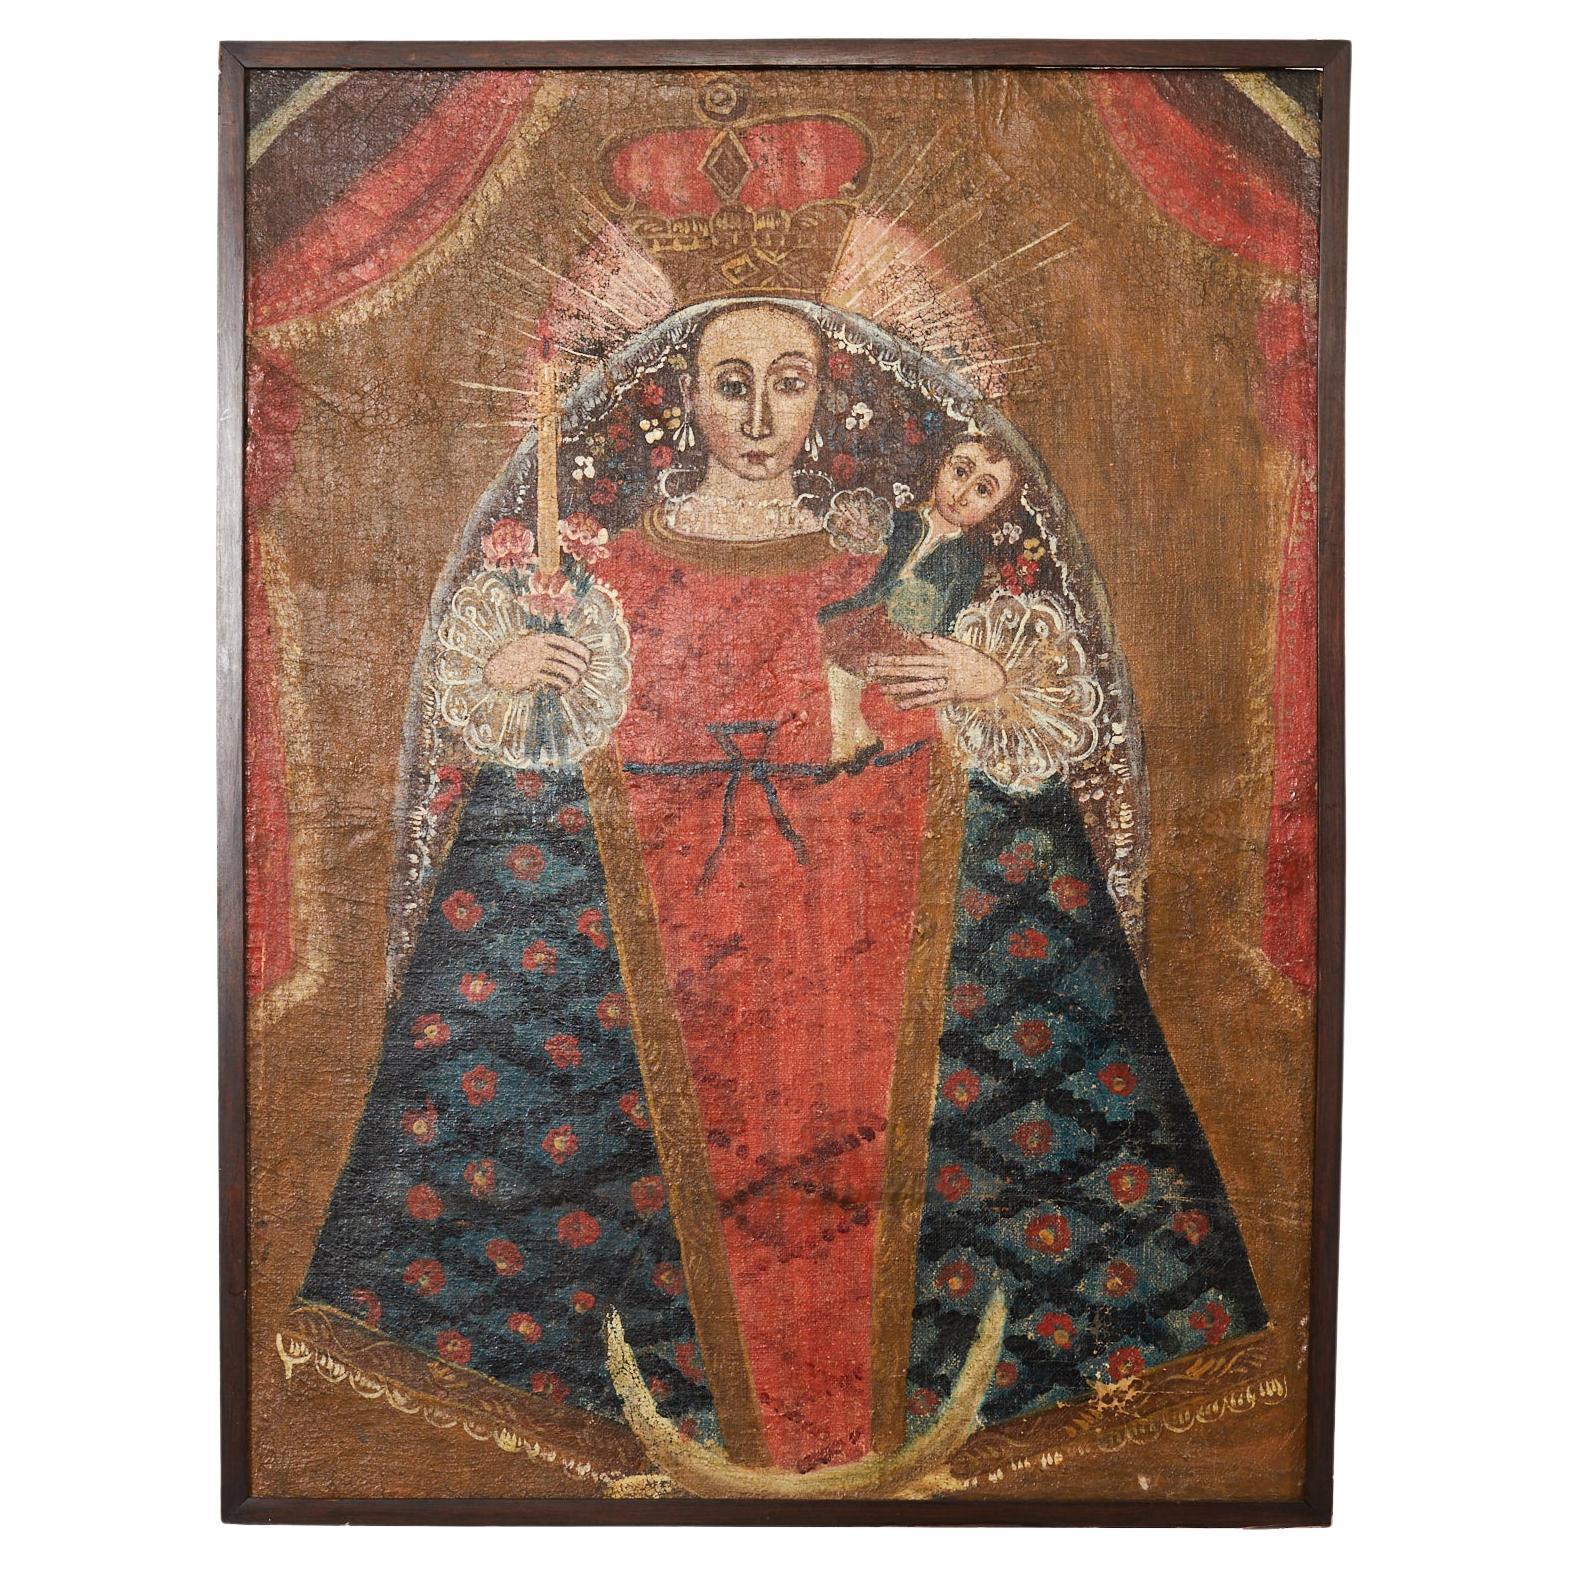 Spanische Kolonial- Cuzco-Schule Madonna Jungfrau Maria Gemälde